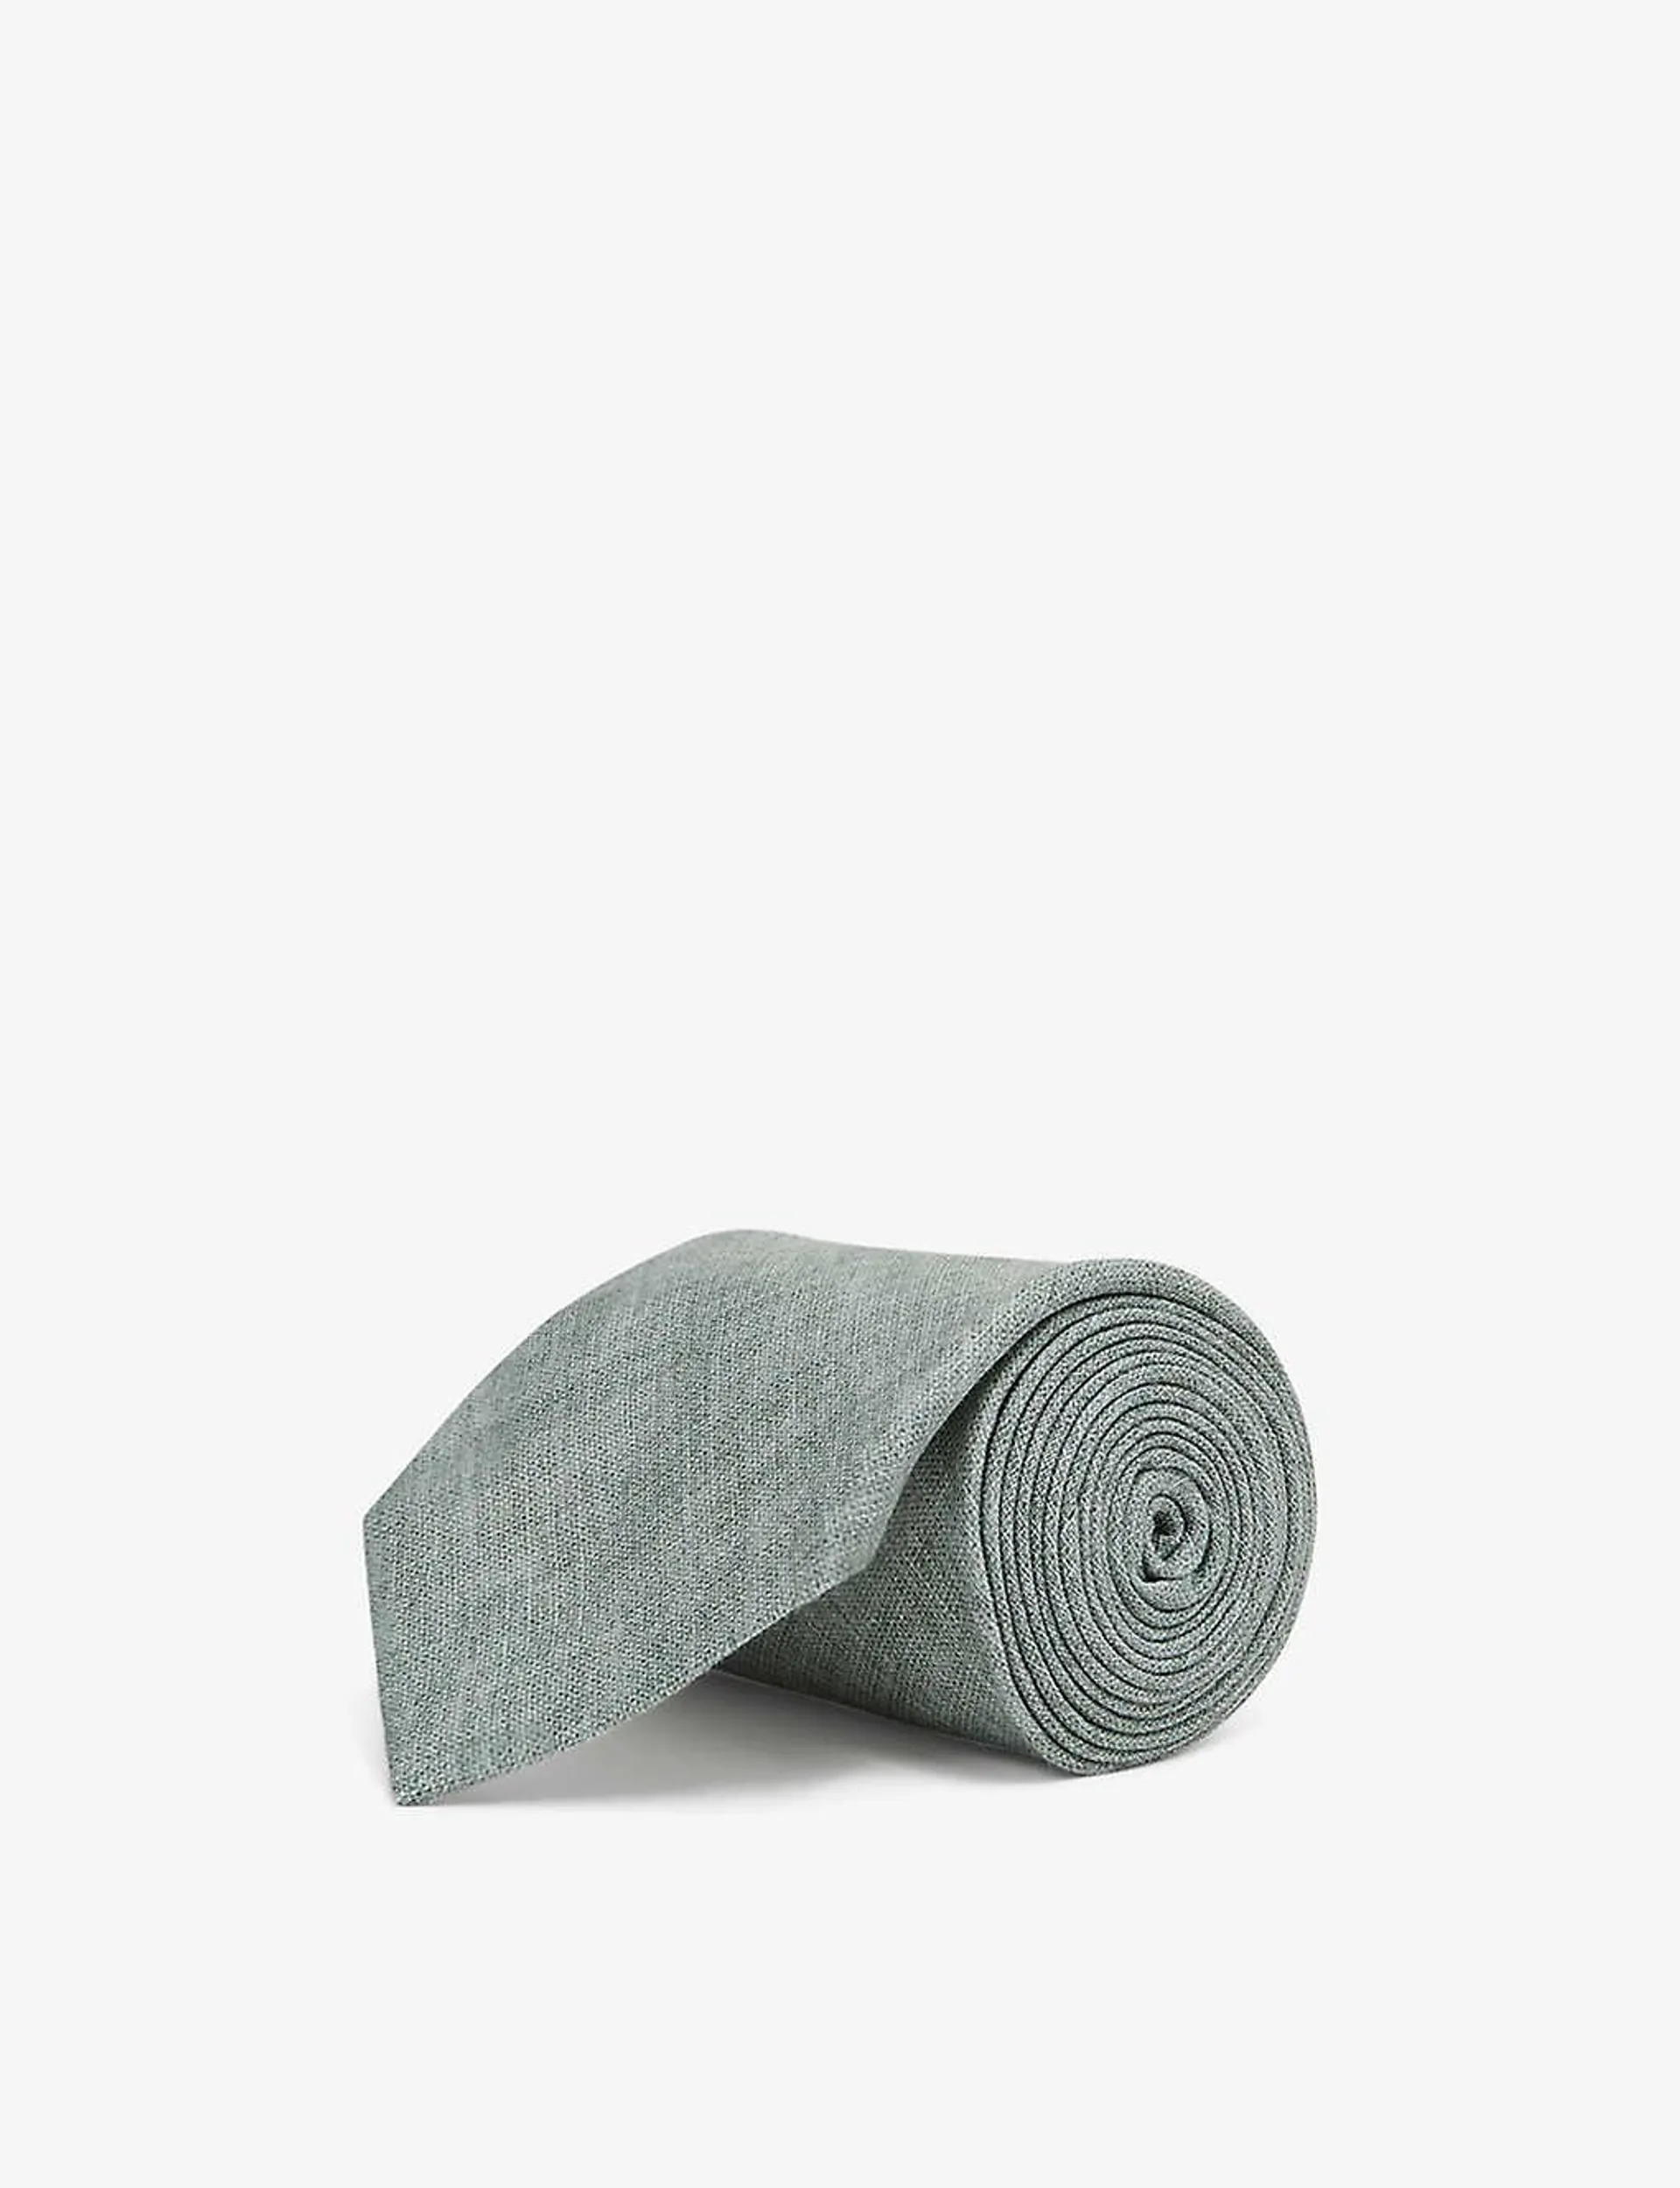 Lazzaro woven-pattern linen tie